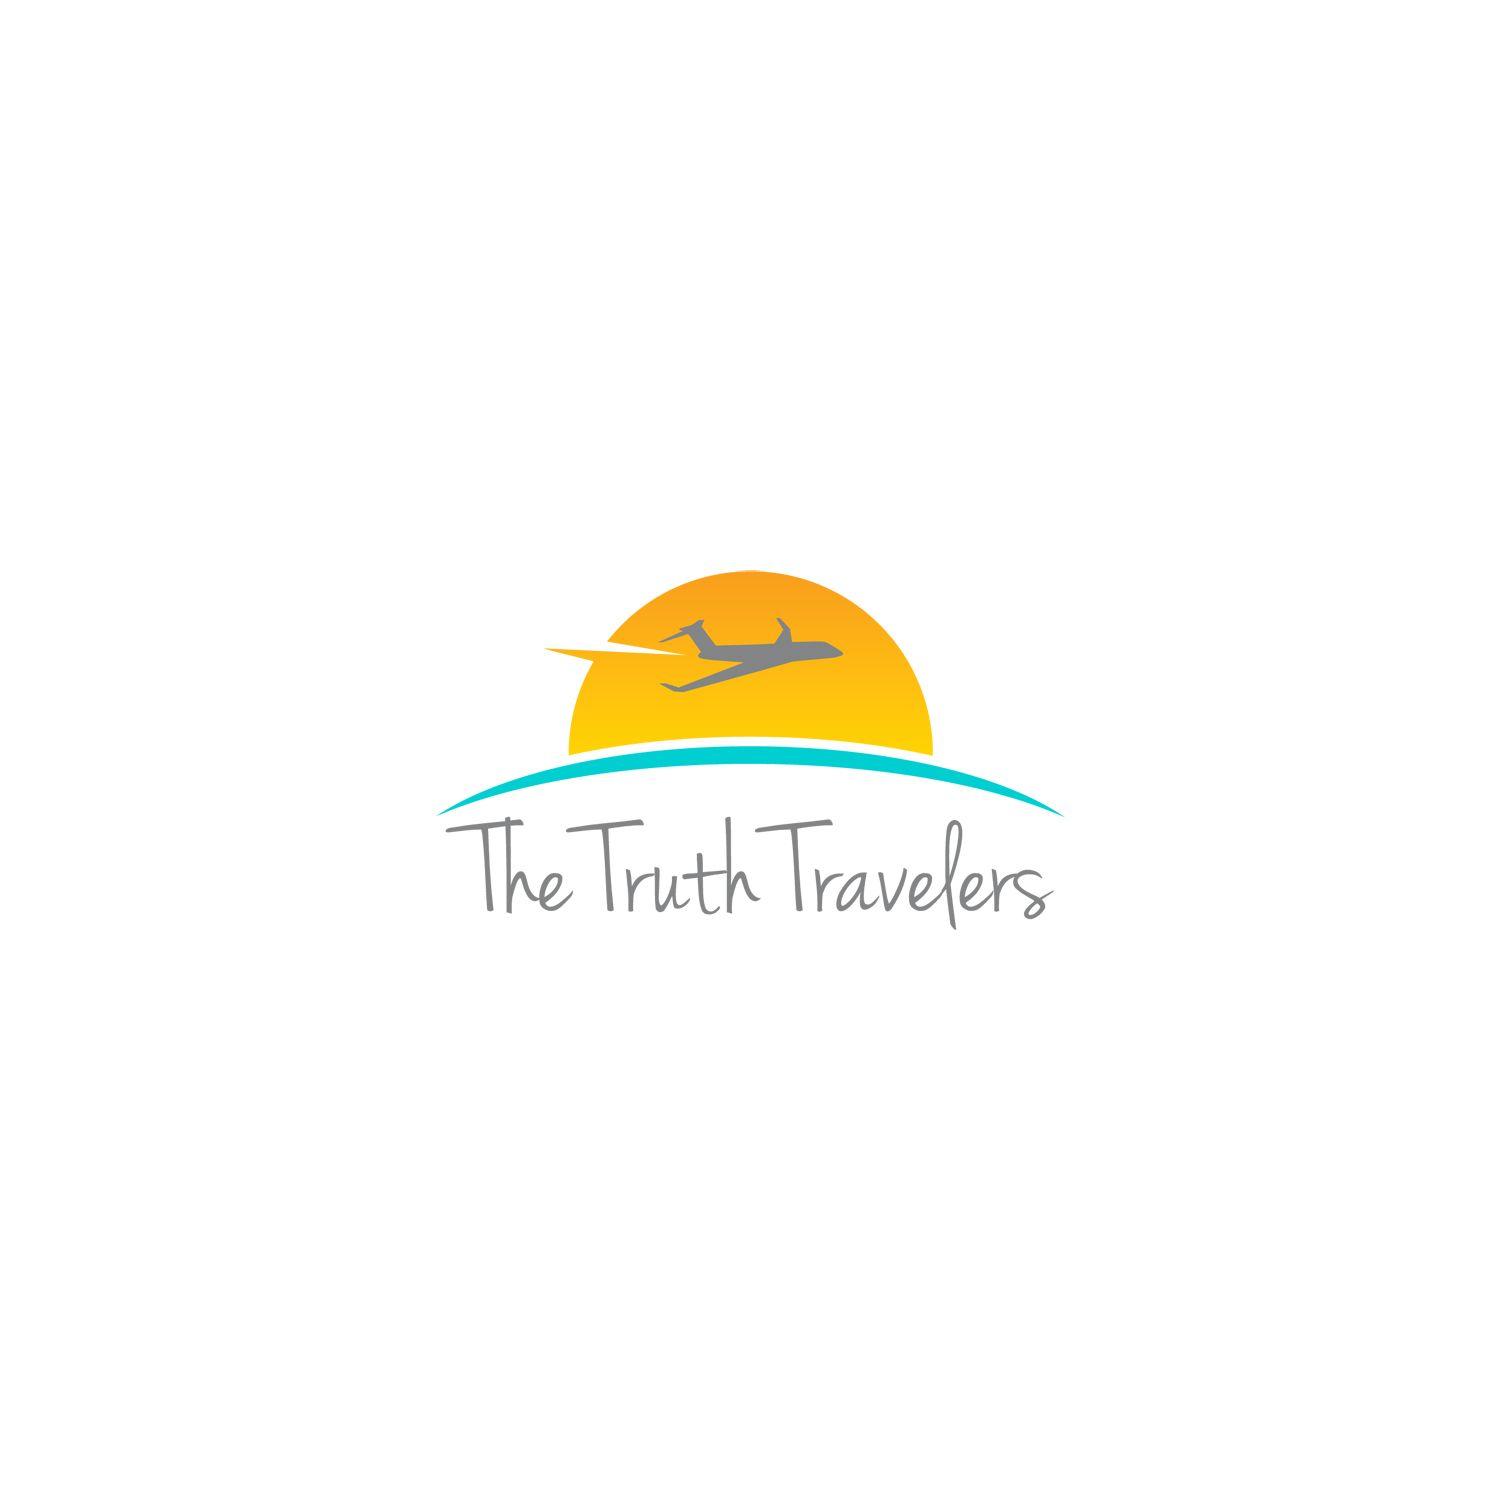 Travelers Logo - Upmarket, Modern, It Company Logo Design for The Truth Travelers